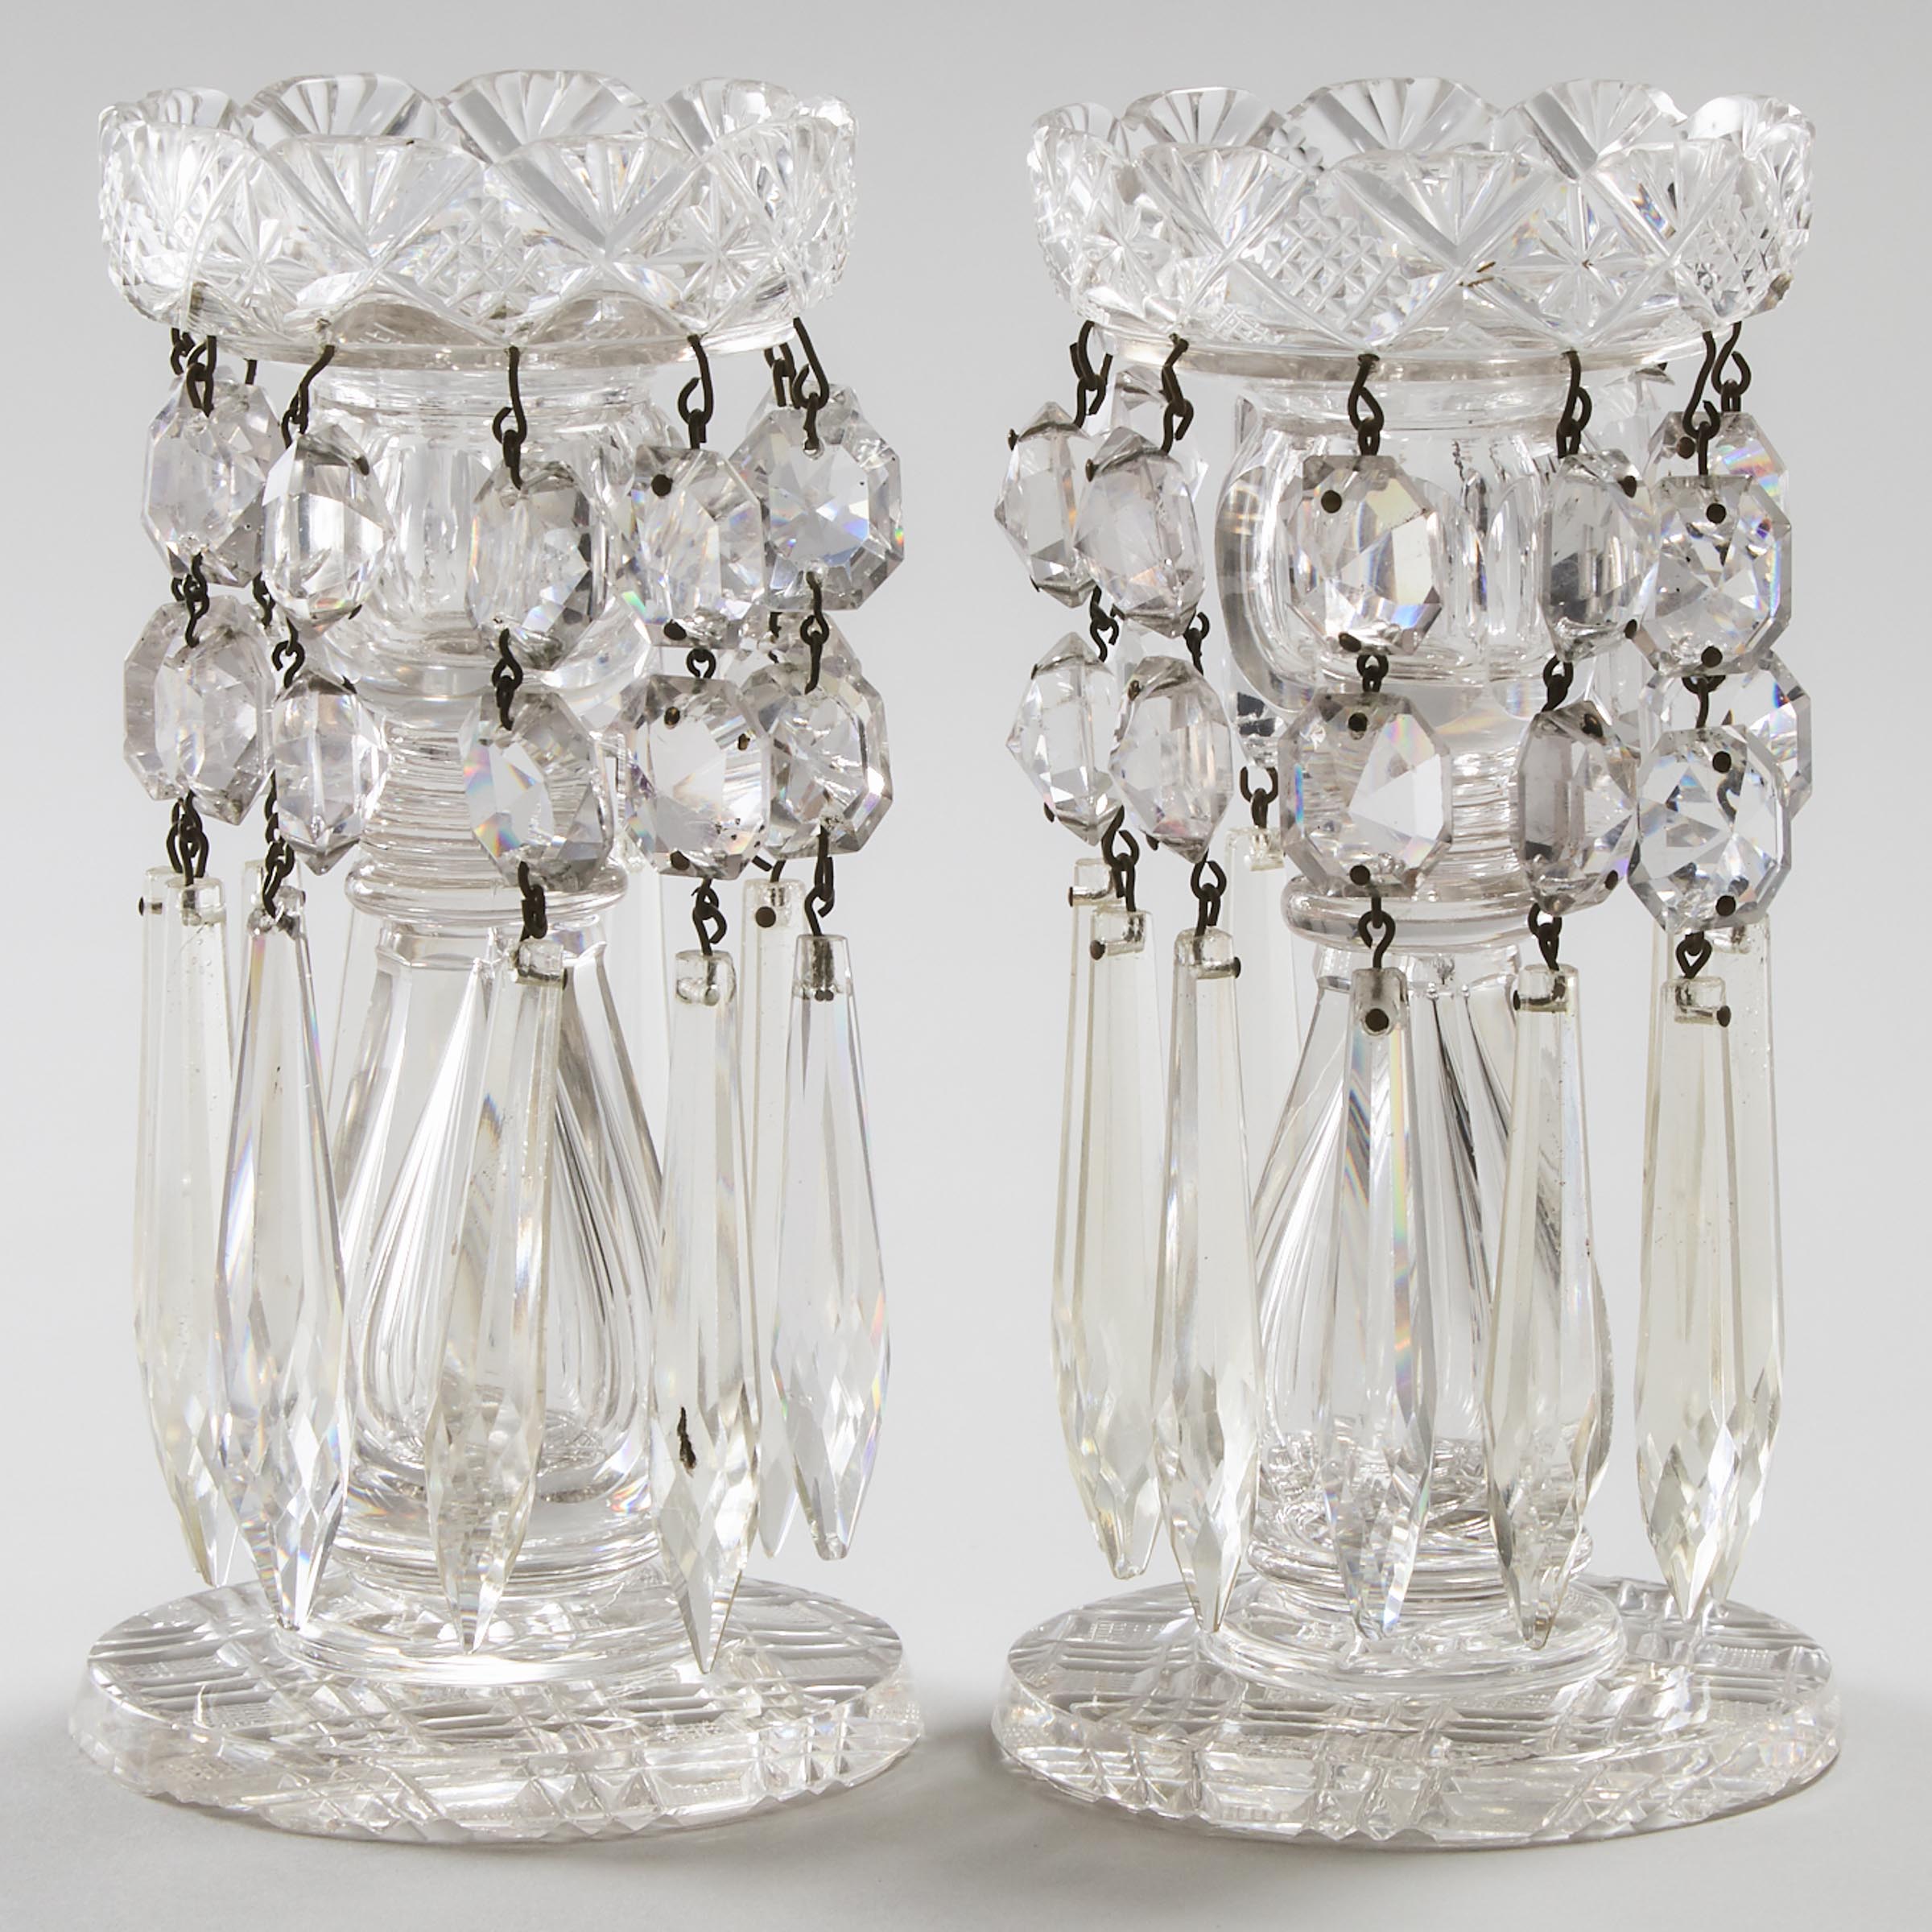 Pair of Anglo-Irish Cut Glass Lustre Candlesticks, 19th century